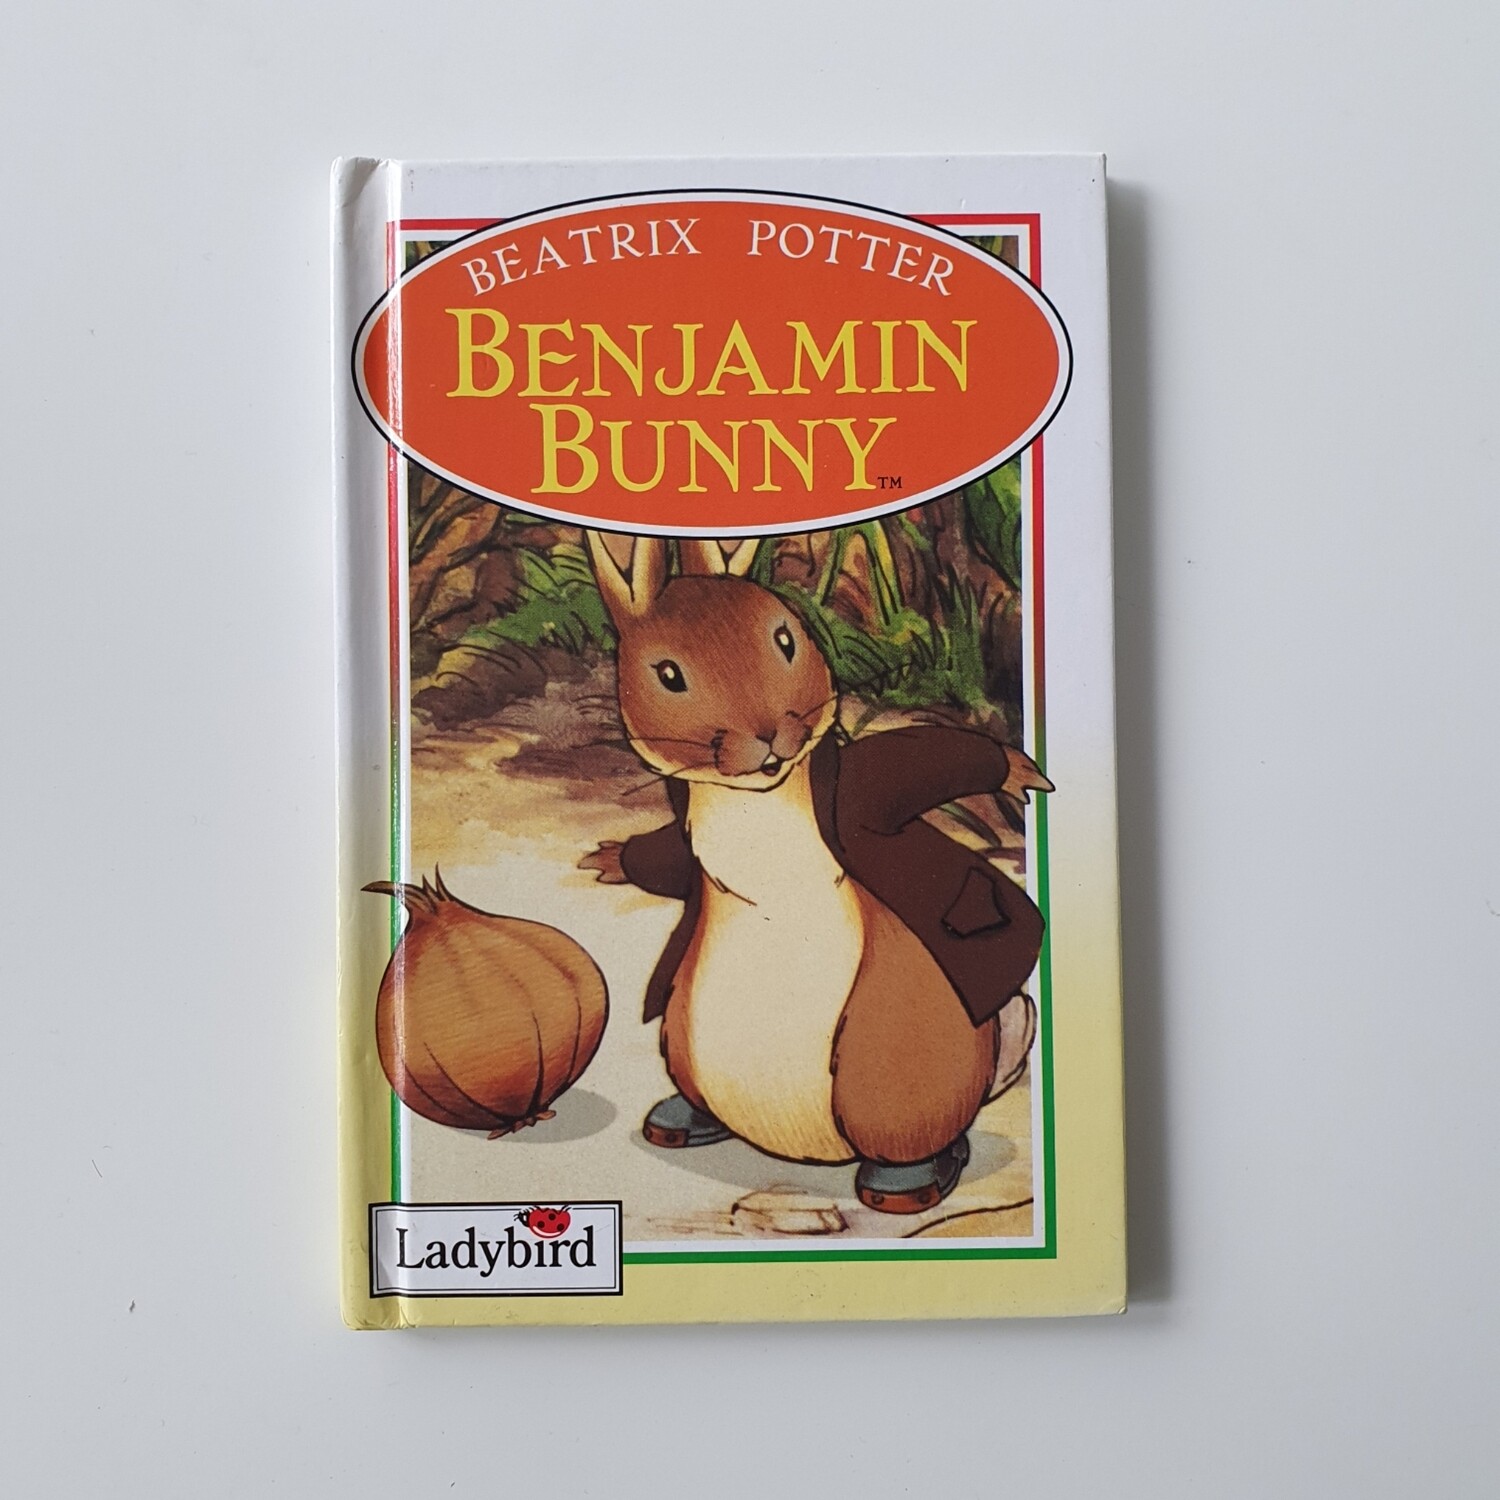 Benjamin Bunny Notebook - Ladybird book, Beatrix Potter